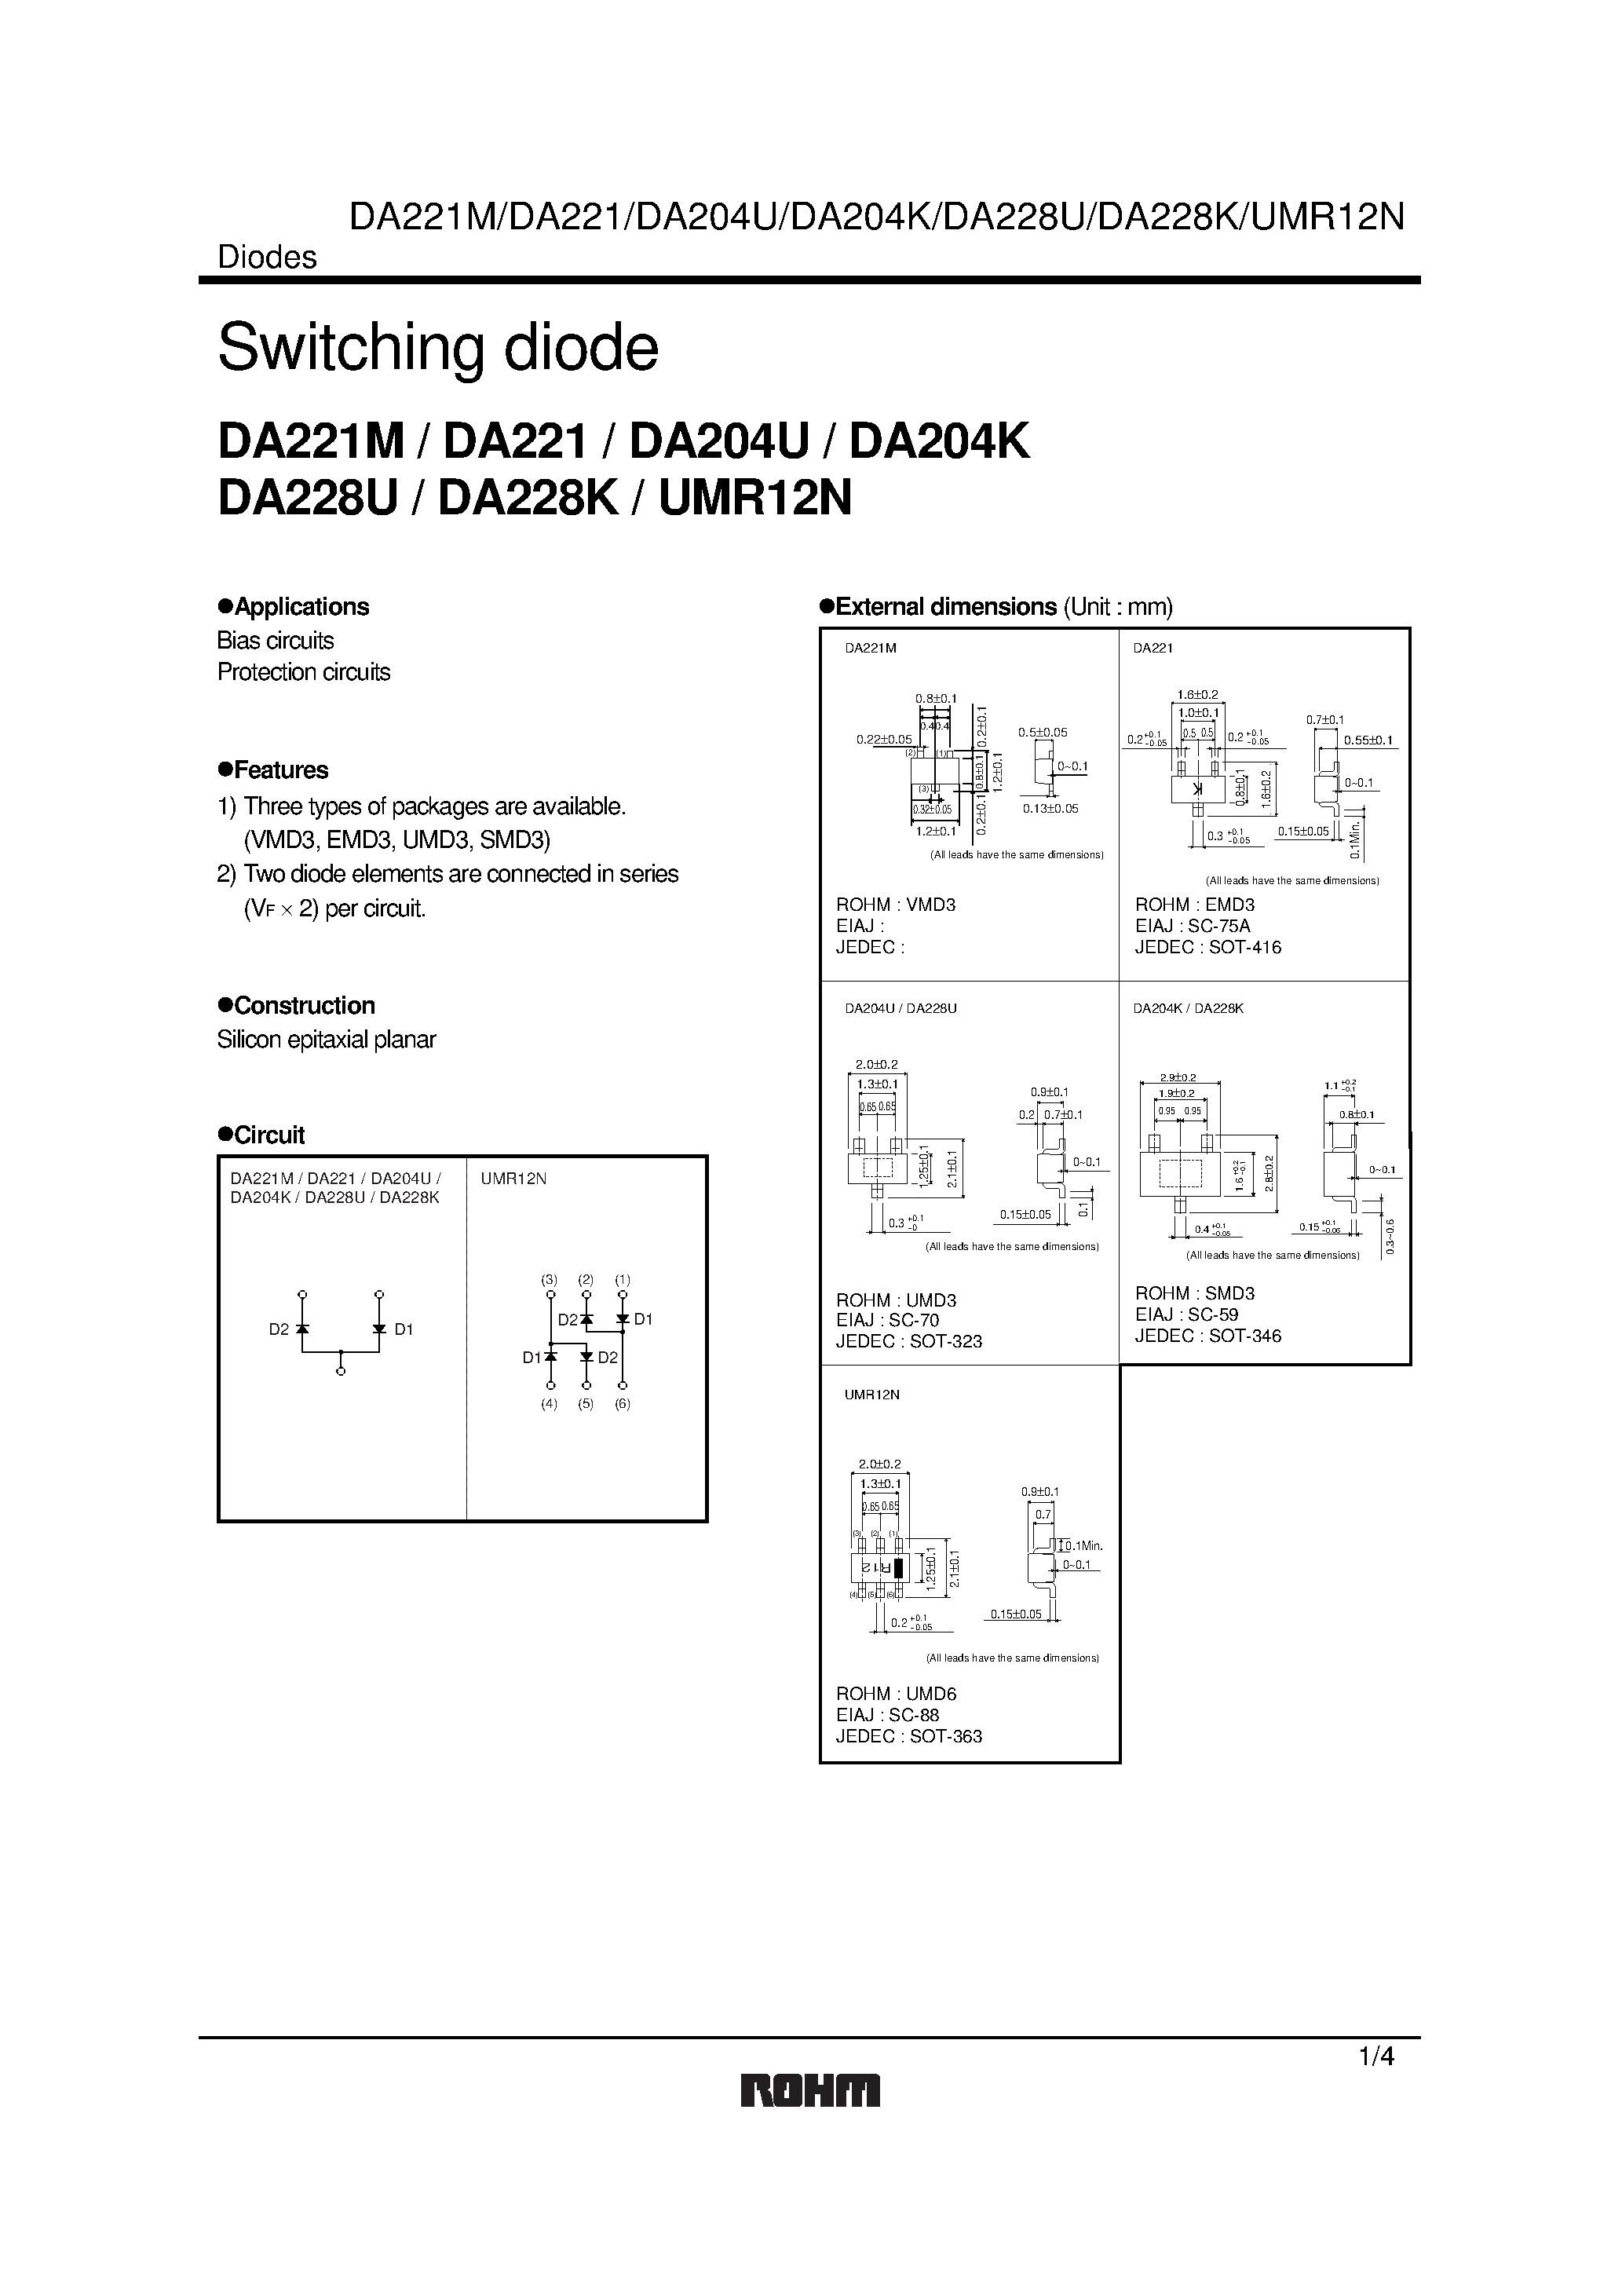 Datasheet DA204U - Switching diode Silicon epitaxial planar page 1